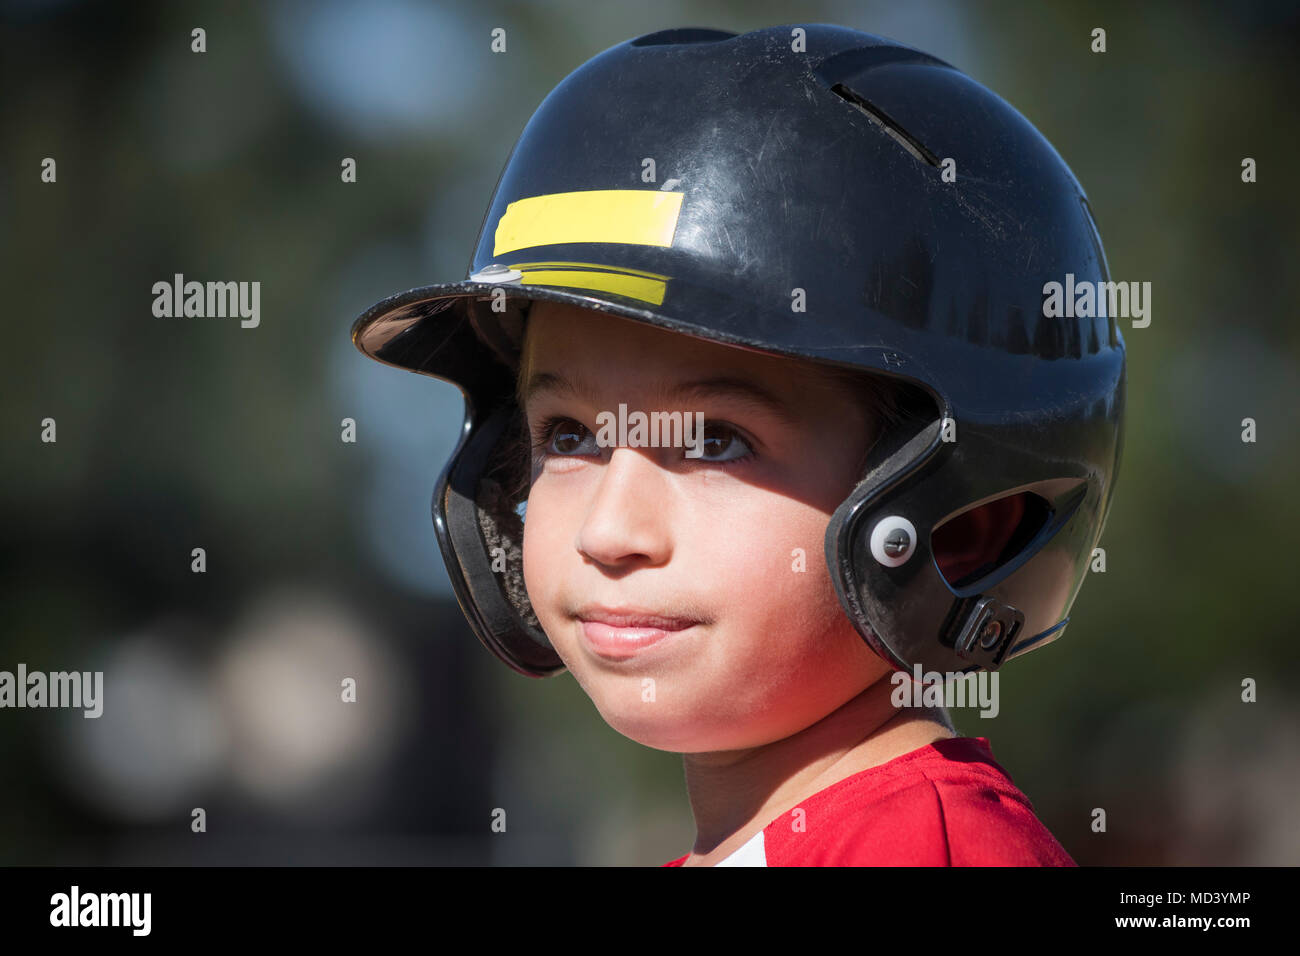 Young baseball player Stock Photo